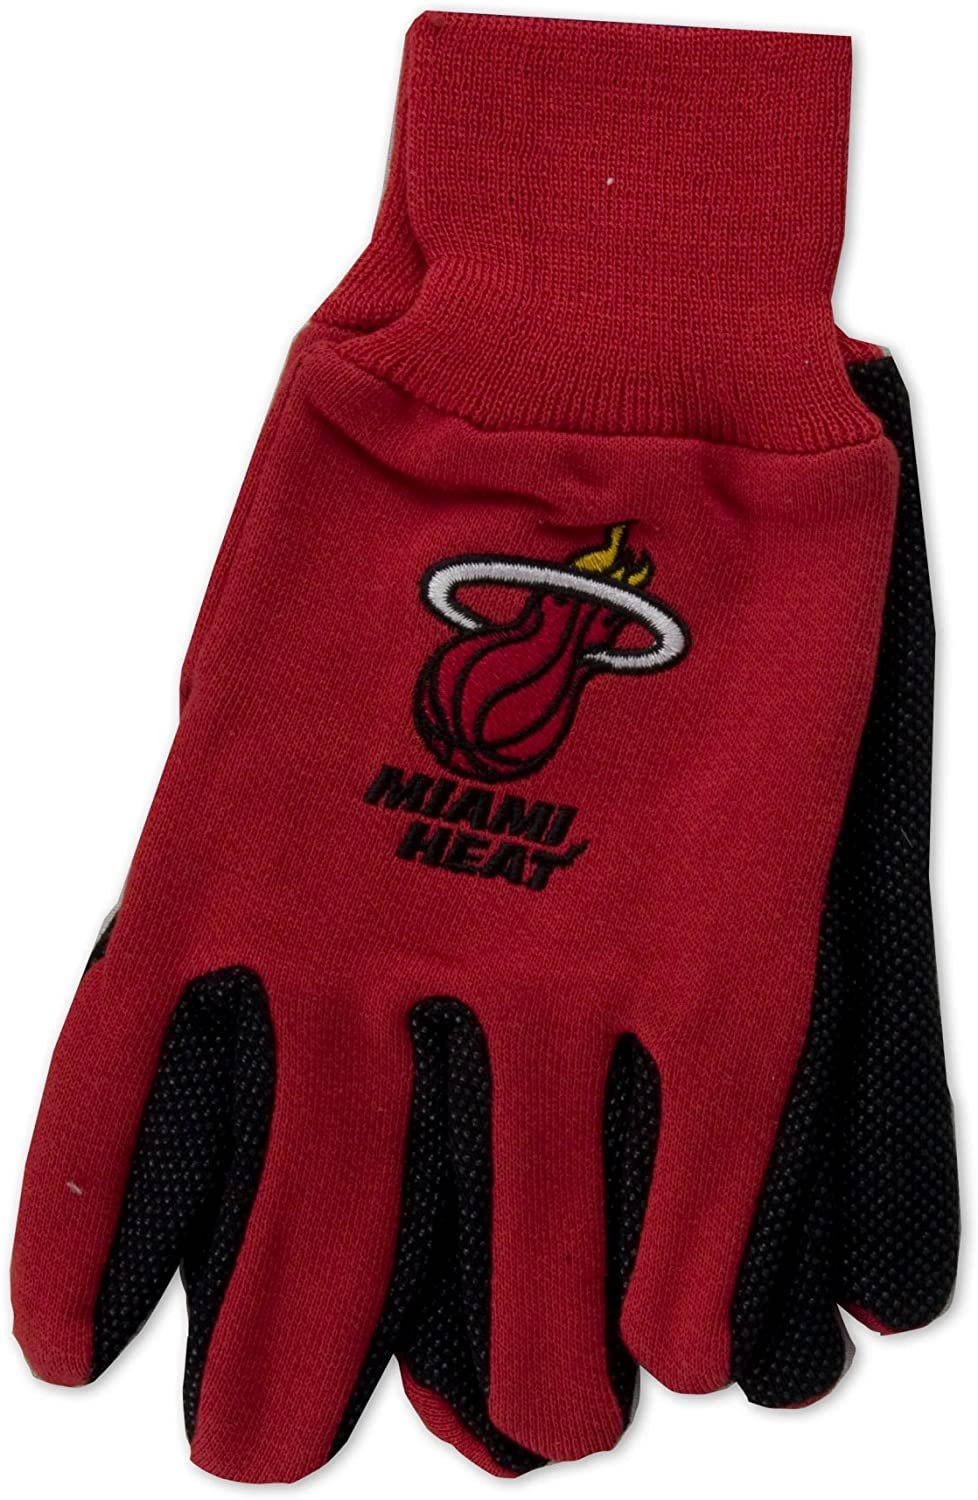 Miami Heat Two-Tone Gloves with Anti-slip Rubber Gripper Design